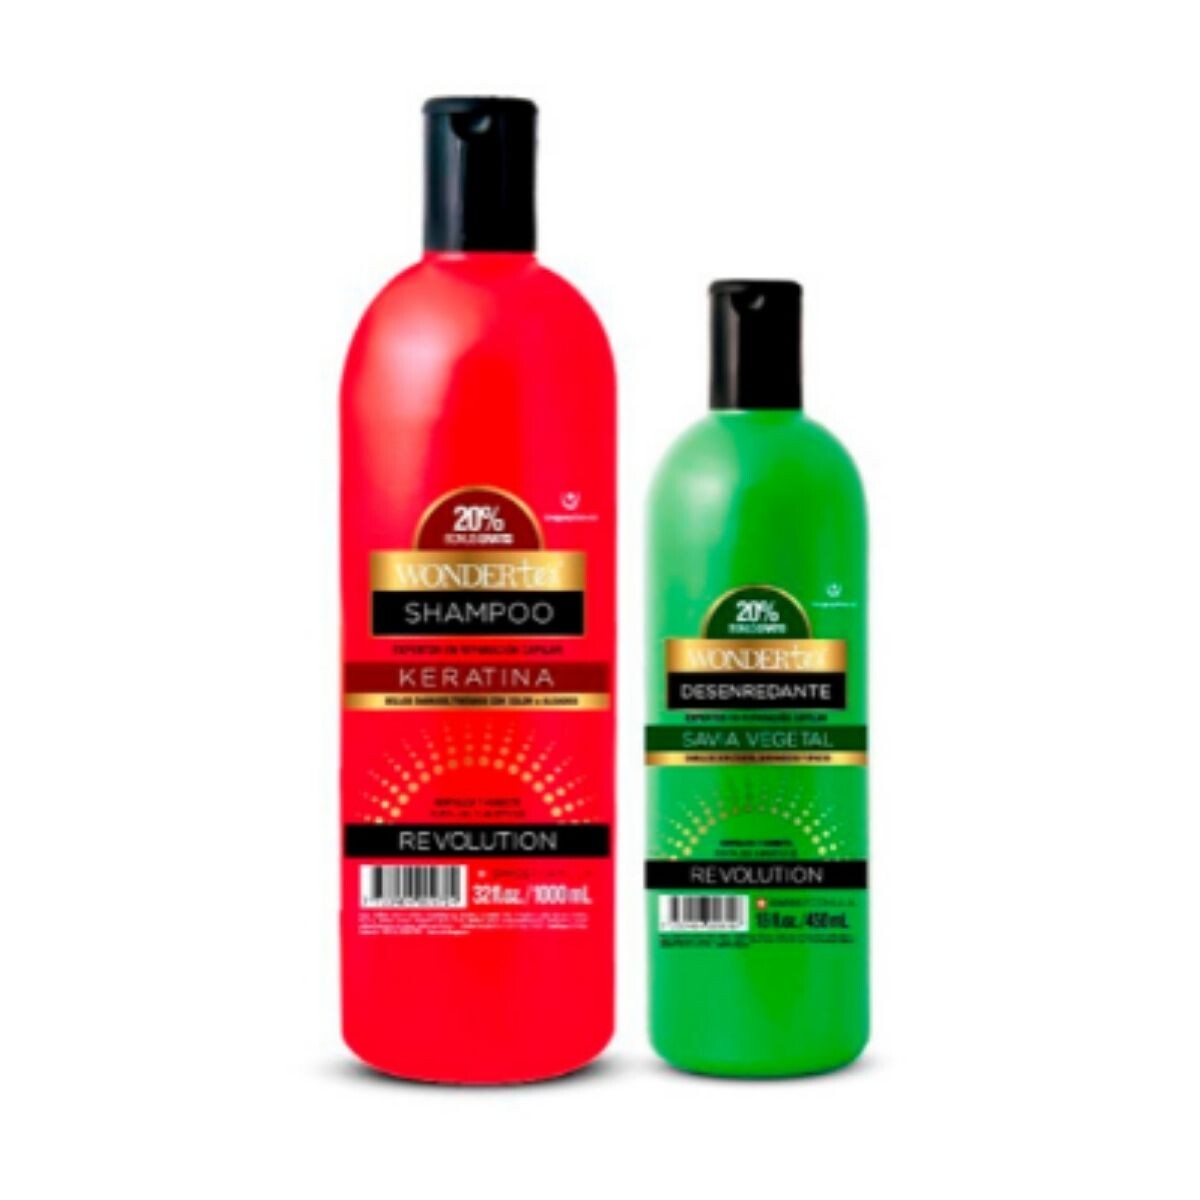 Shampoo WonderTex Keratina 1 LT + Desenredante Savia 450 ML con 50% OFF 